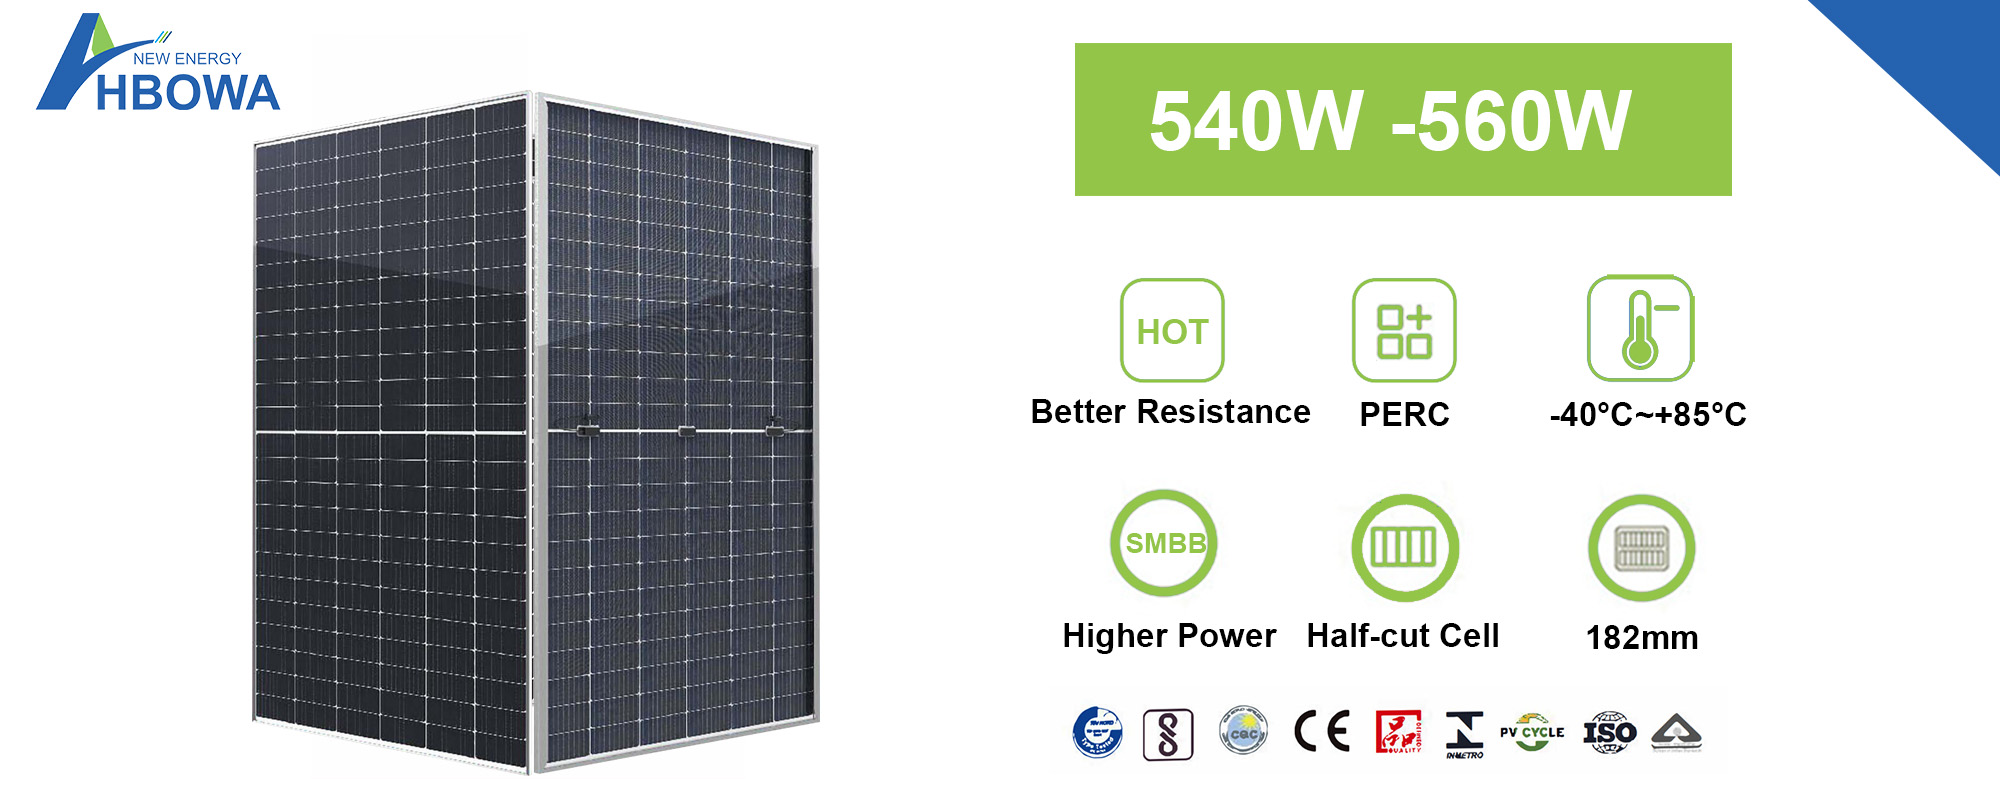 540-560W mono-bifacial solar panel - HBOWA